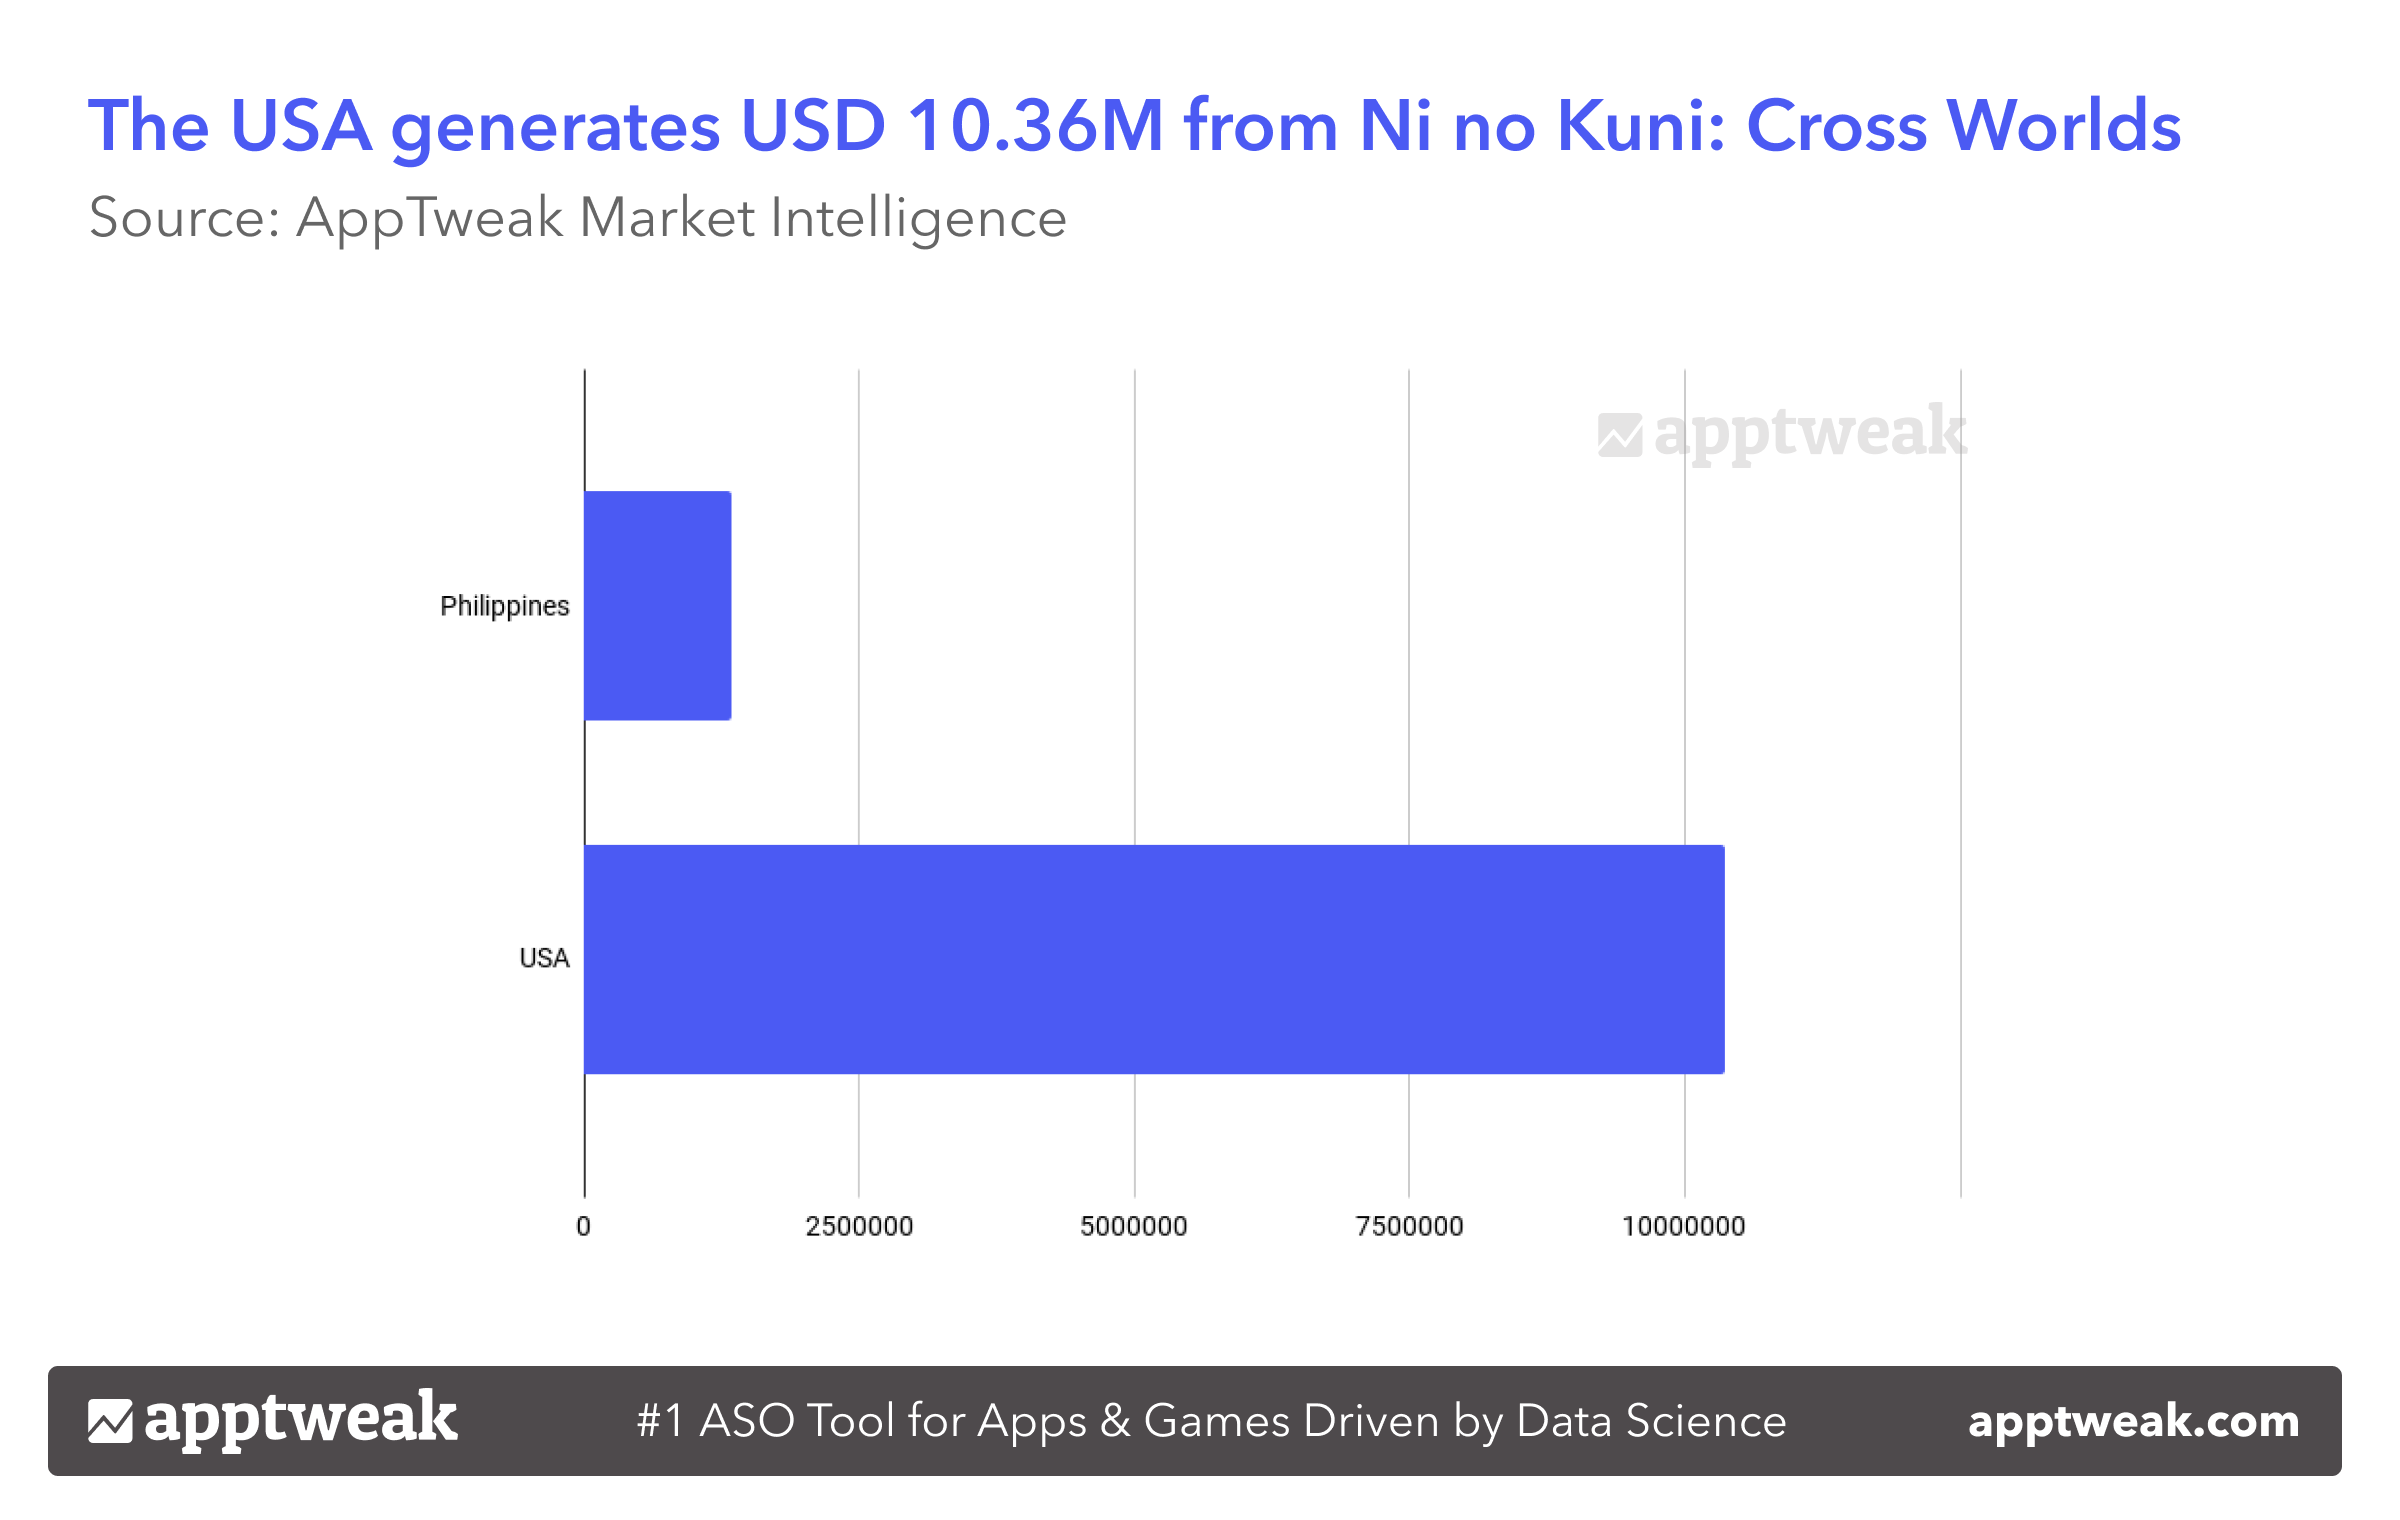 The USA generates USD 10.36M from Ni no Kuni: Cross Worlds.